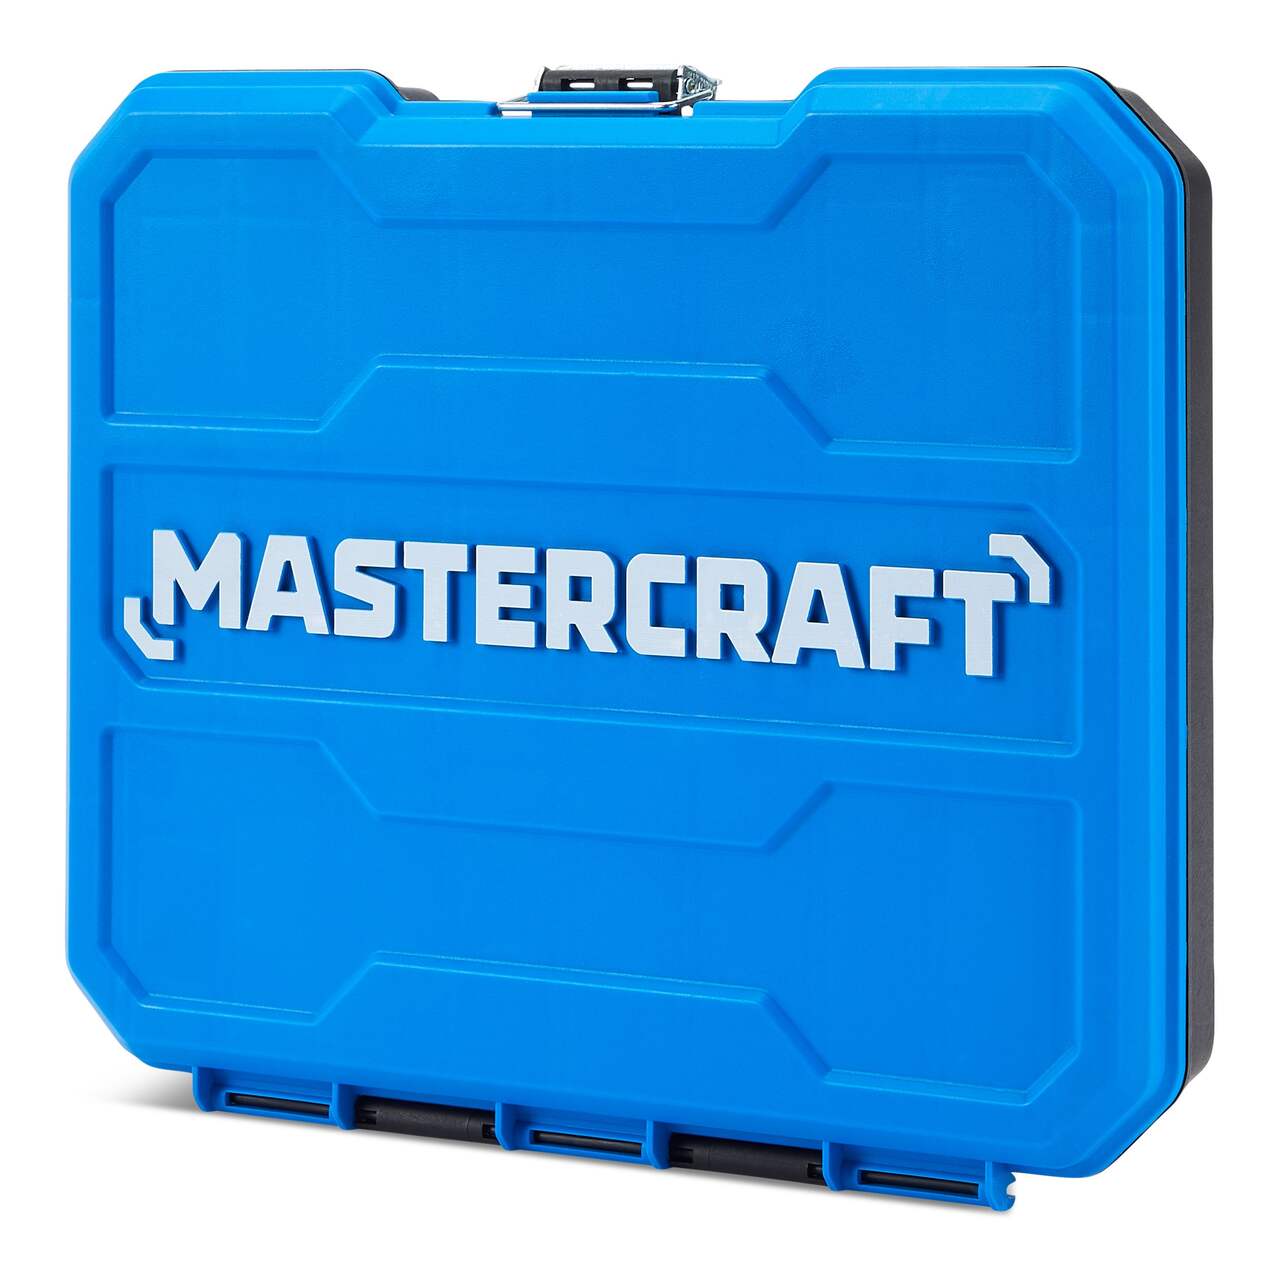 Mastercraft Hex Shank Drill & Drive Set for Wood, Metal, Plastic, Masonry,  100-pc